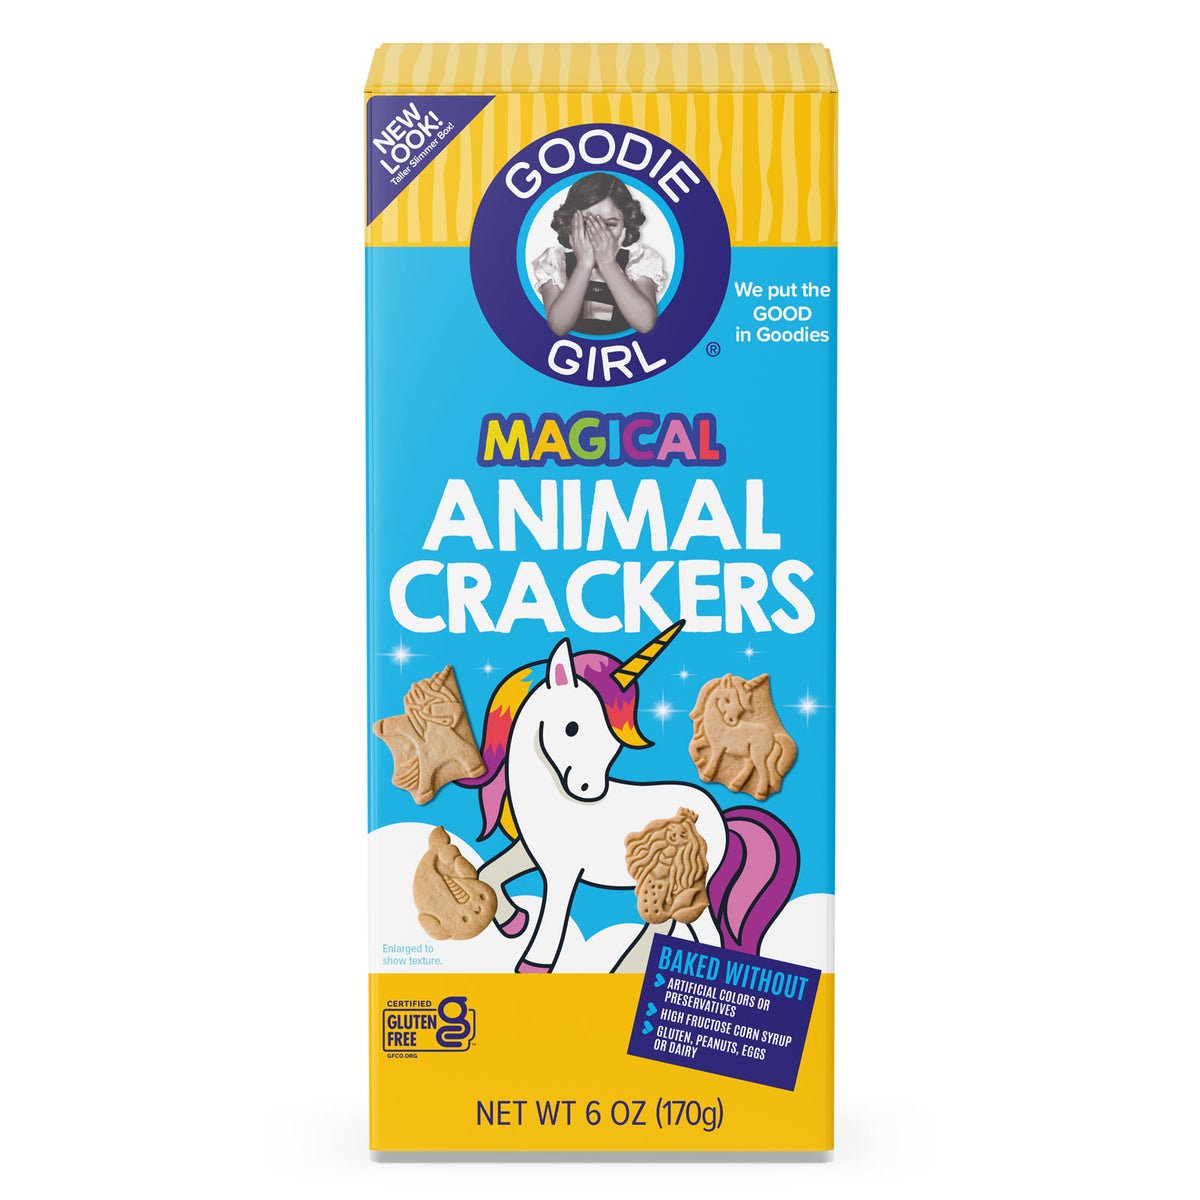 Magical Animal Crackers